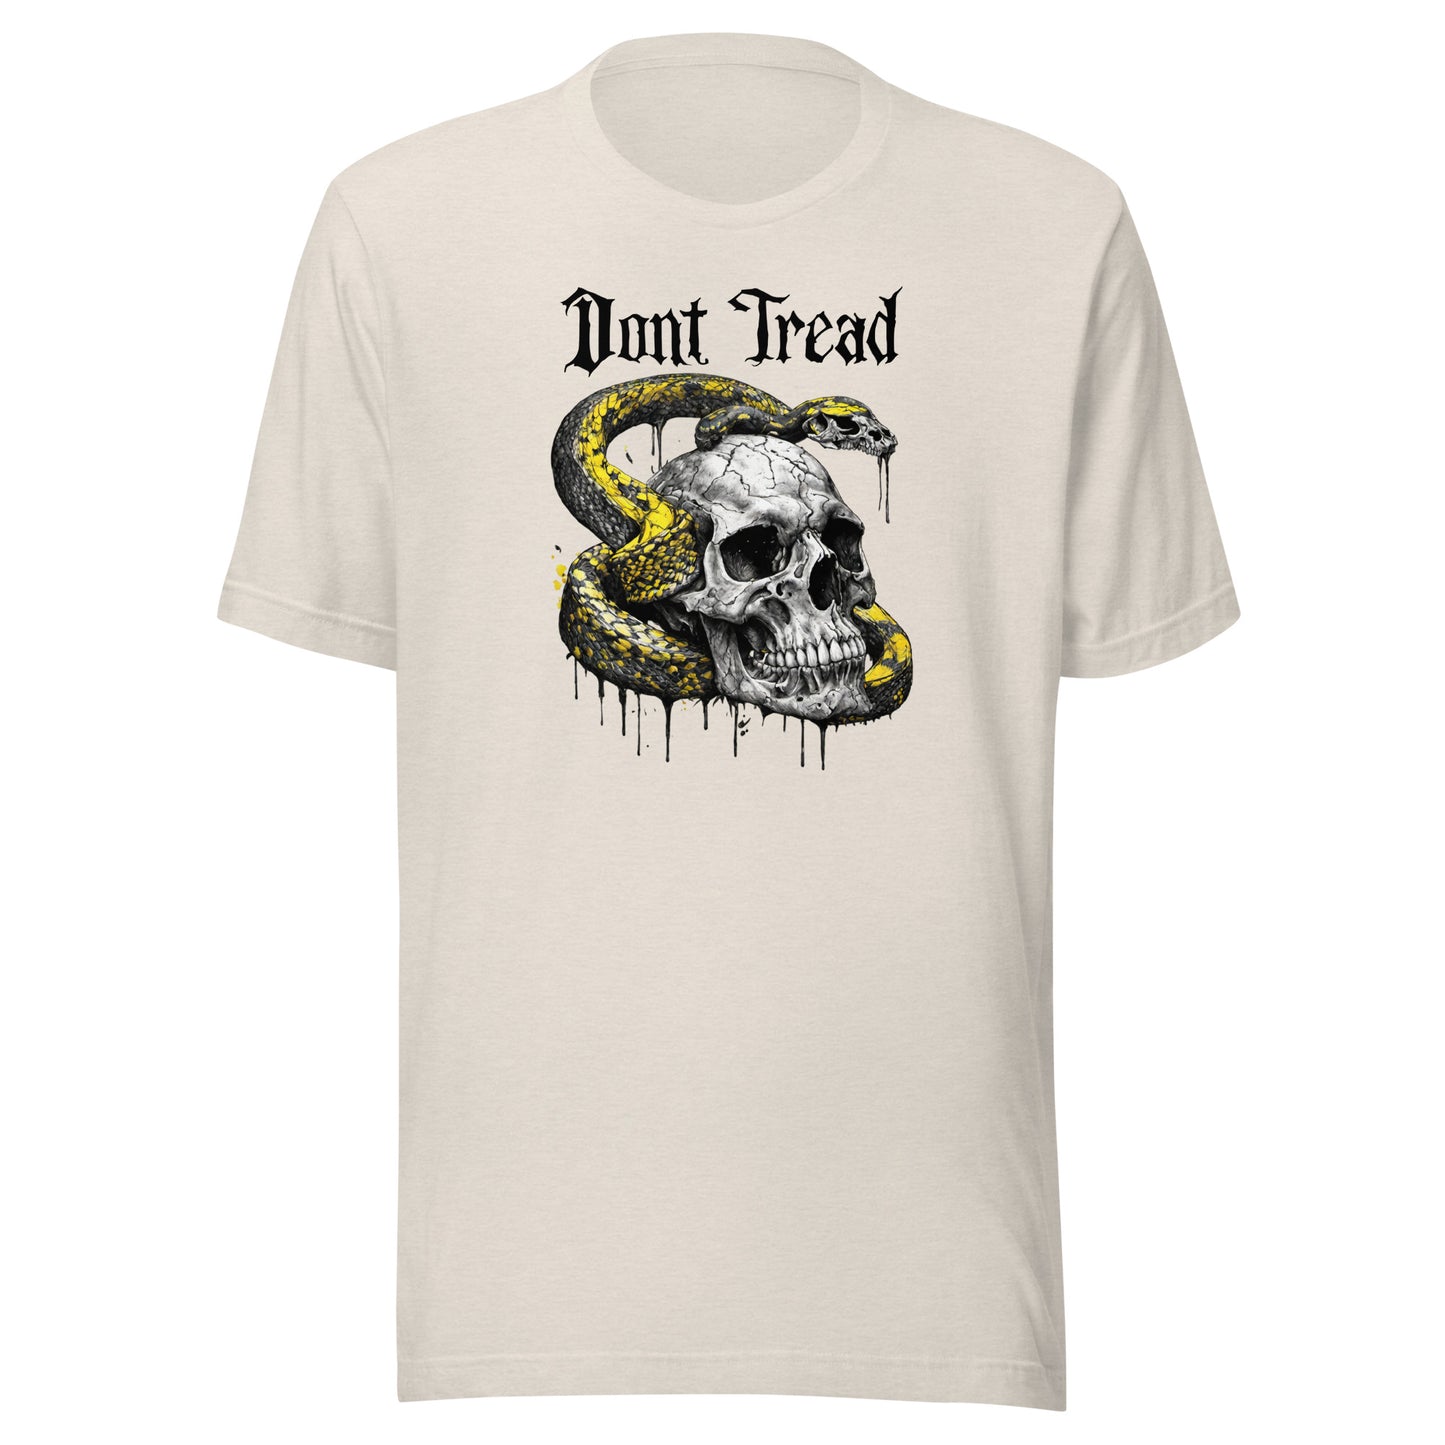 Don't Tread Snake & Skull 2nd Amendment Men's T-Shirt Heather Dust